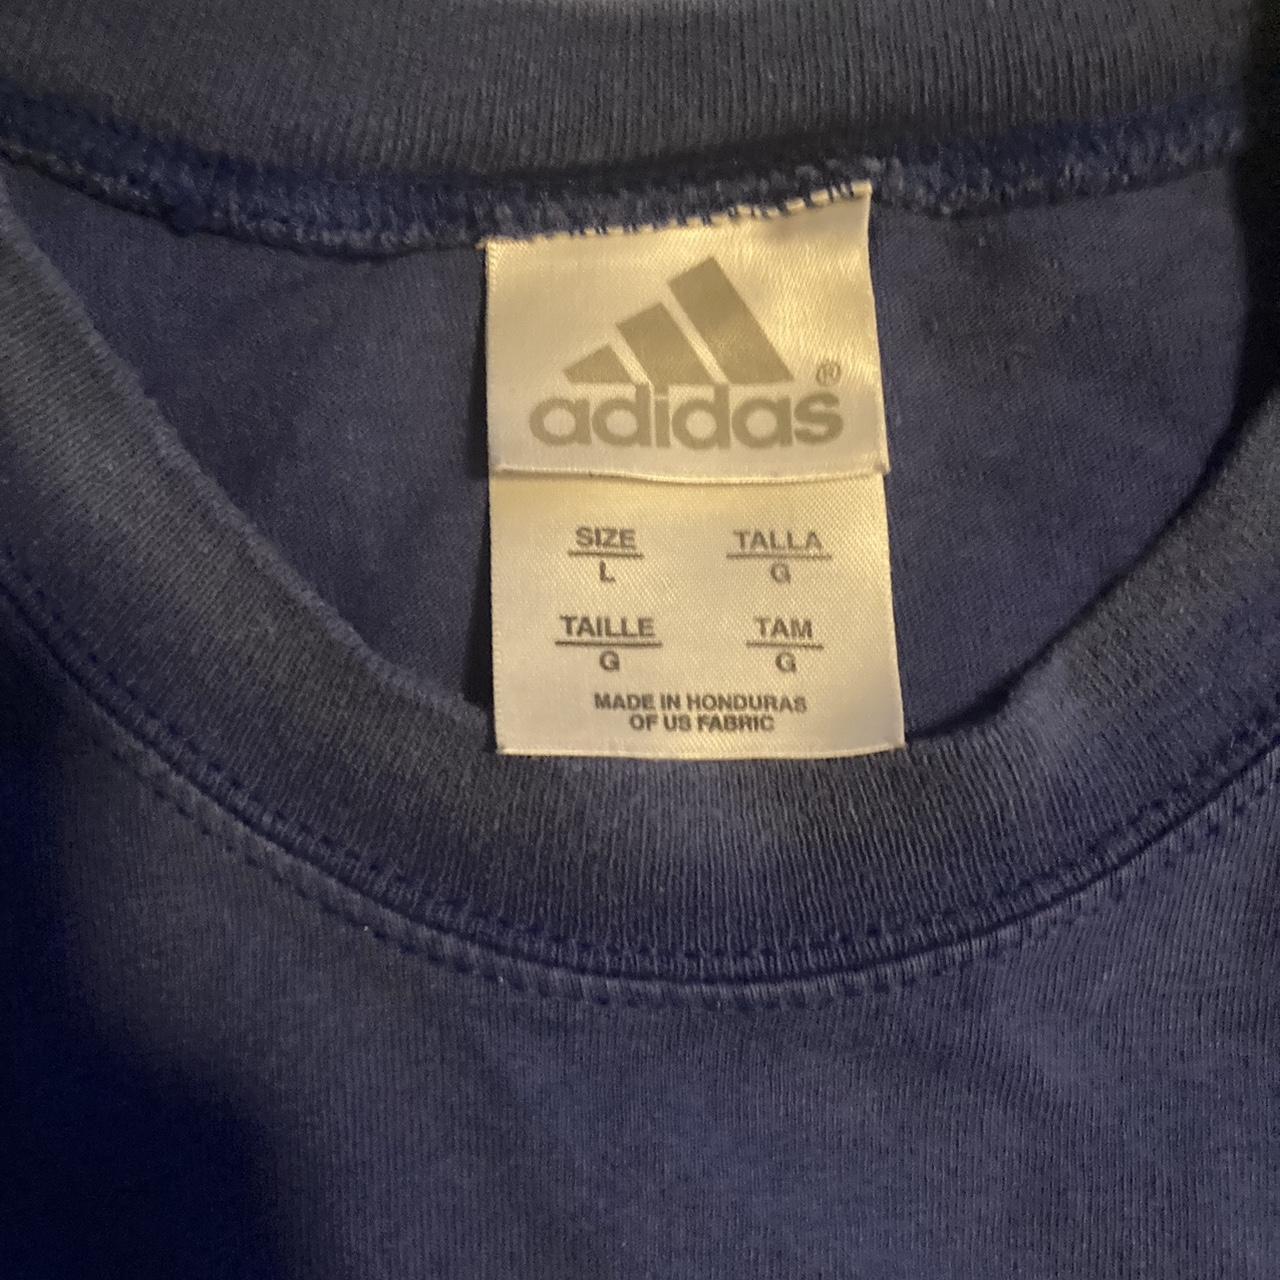 Adidas Men's Blue and White Vest (3)